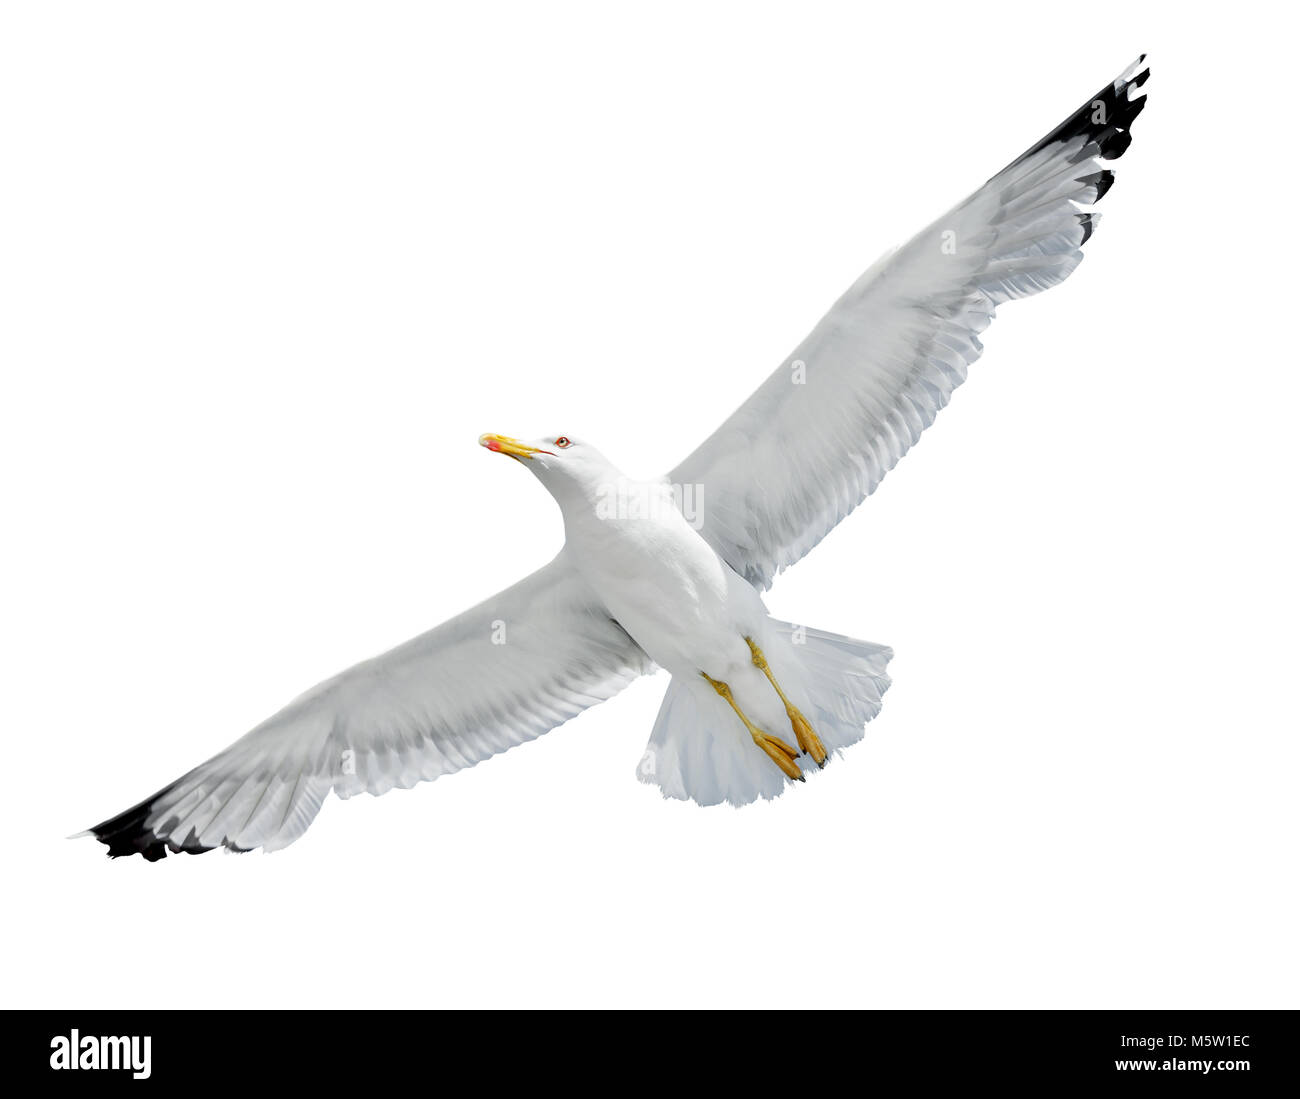 Flying Seagull isolati su sfondo bianco Foto Stock